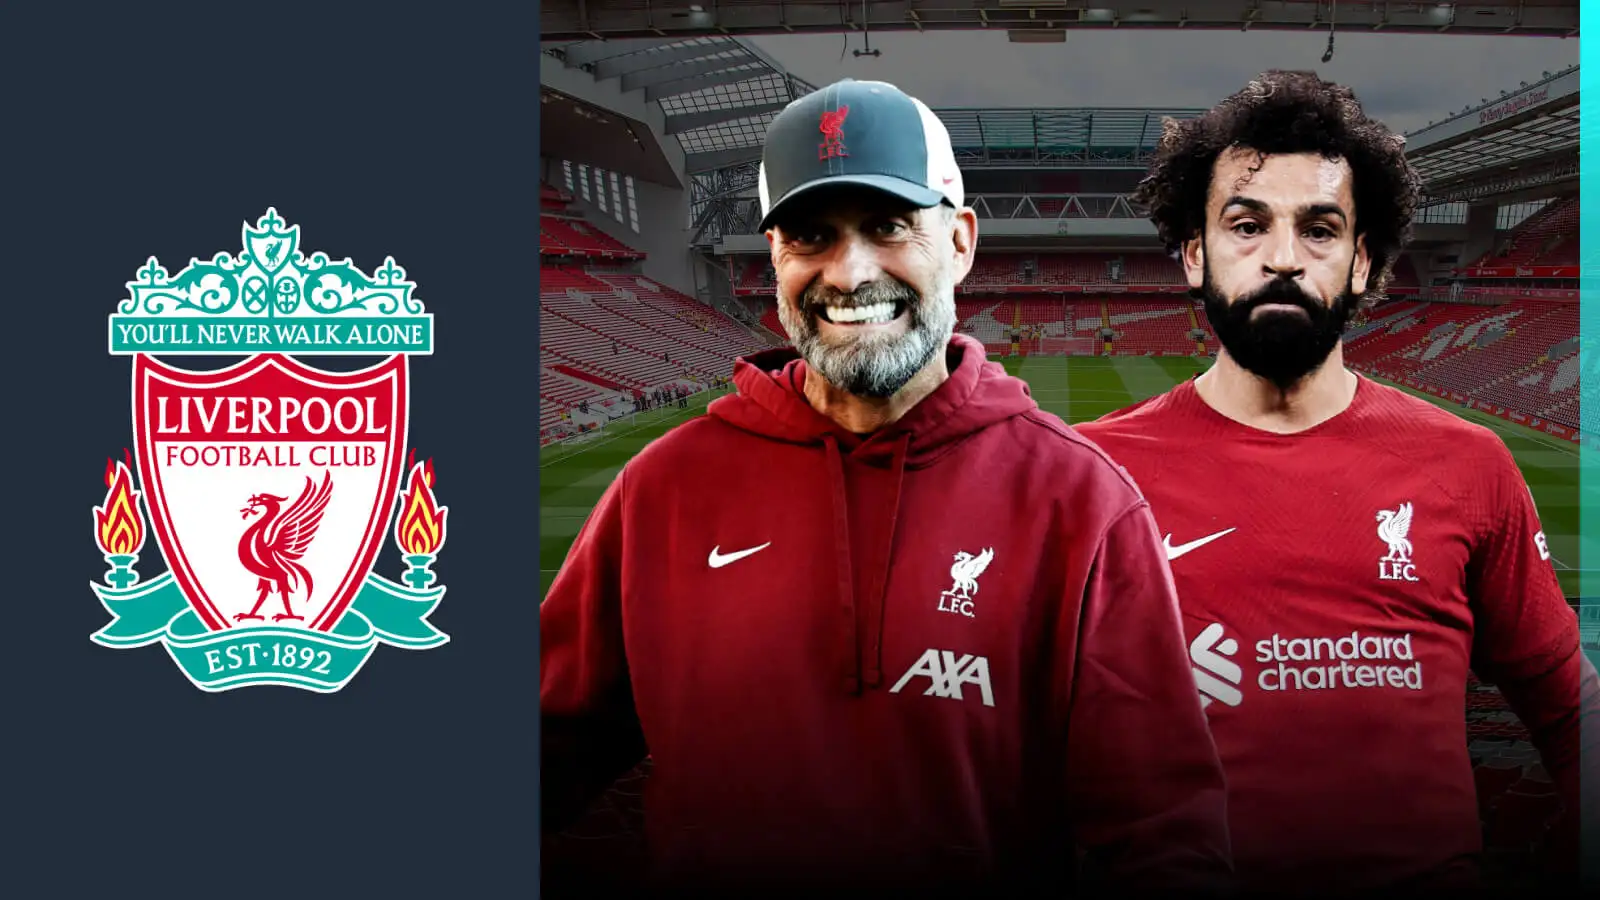 Liverpool duo Mohamed Salah and also Jurgen Klopp